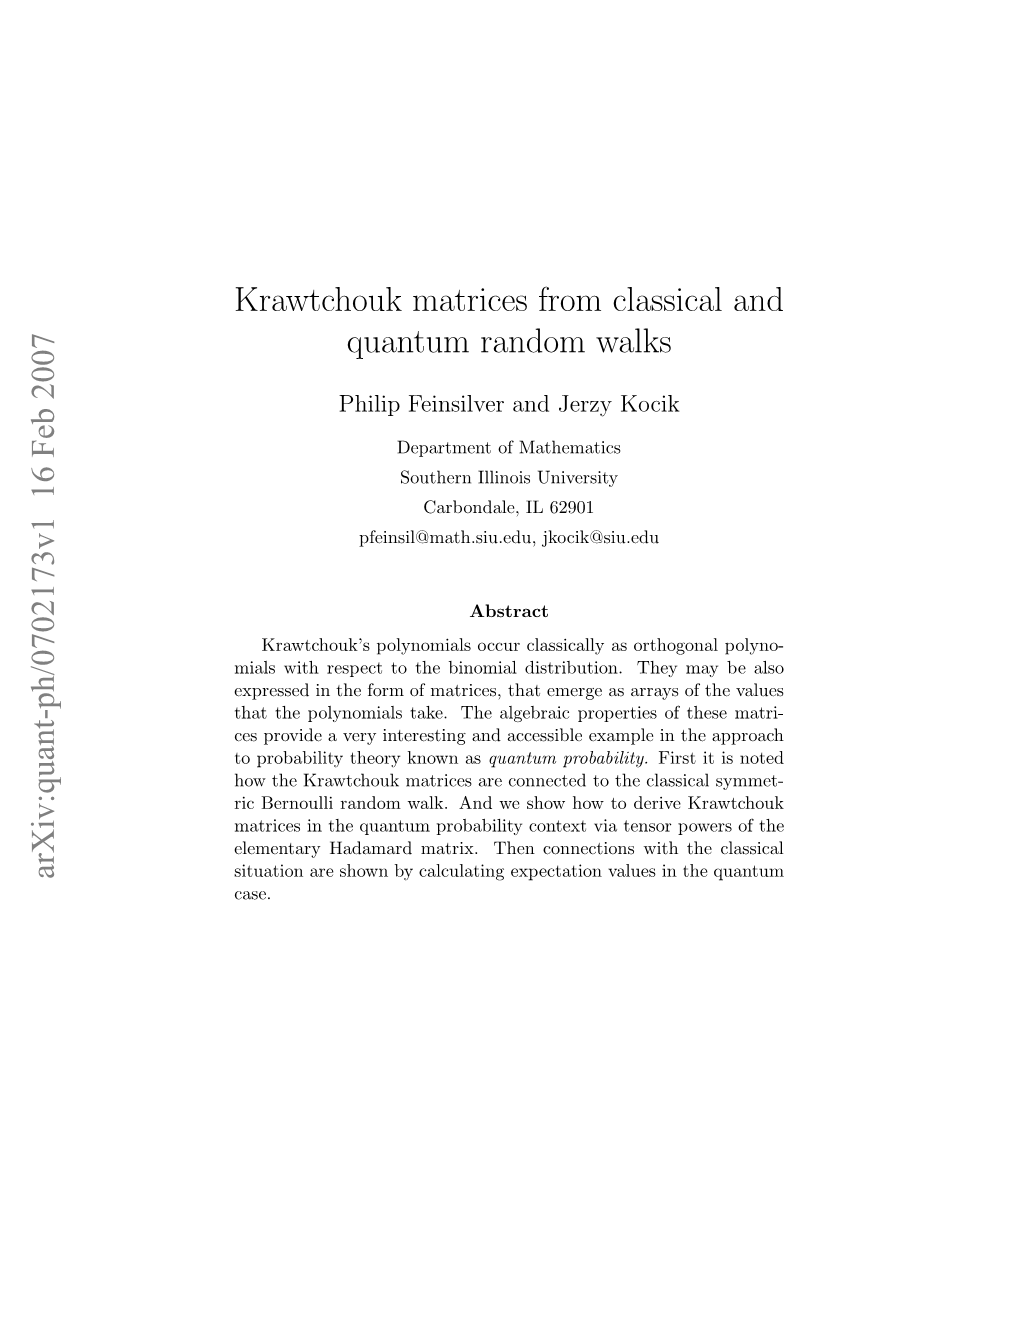 Krawtchouk Matrices from Classical and Quantum Random Walks